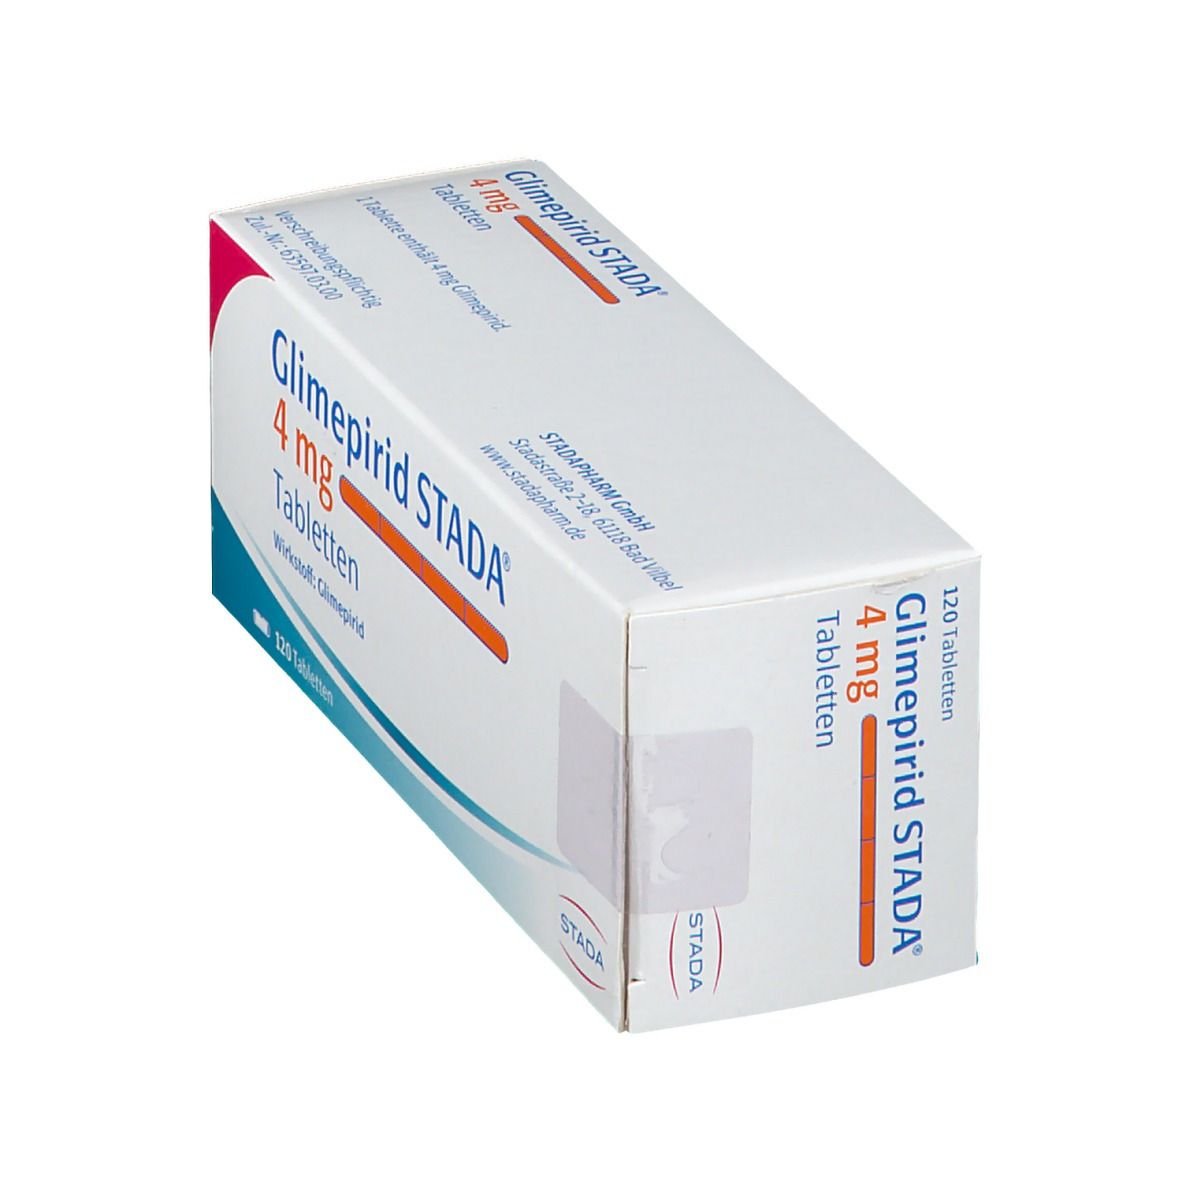 Glimepirid STADA® 4 mg